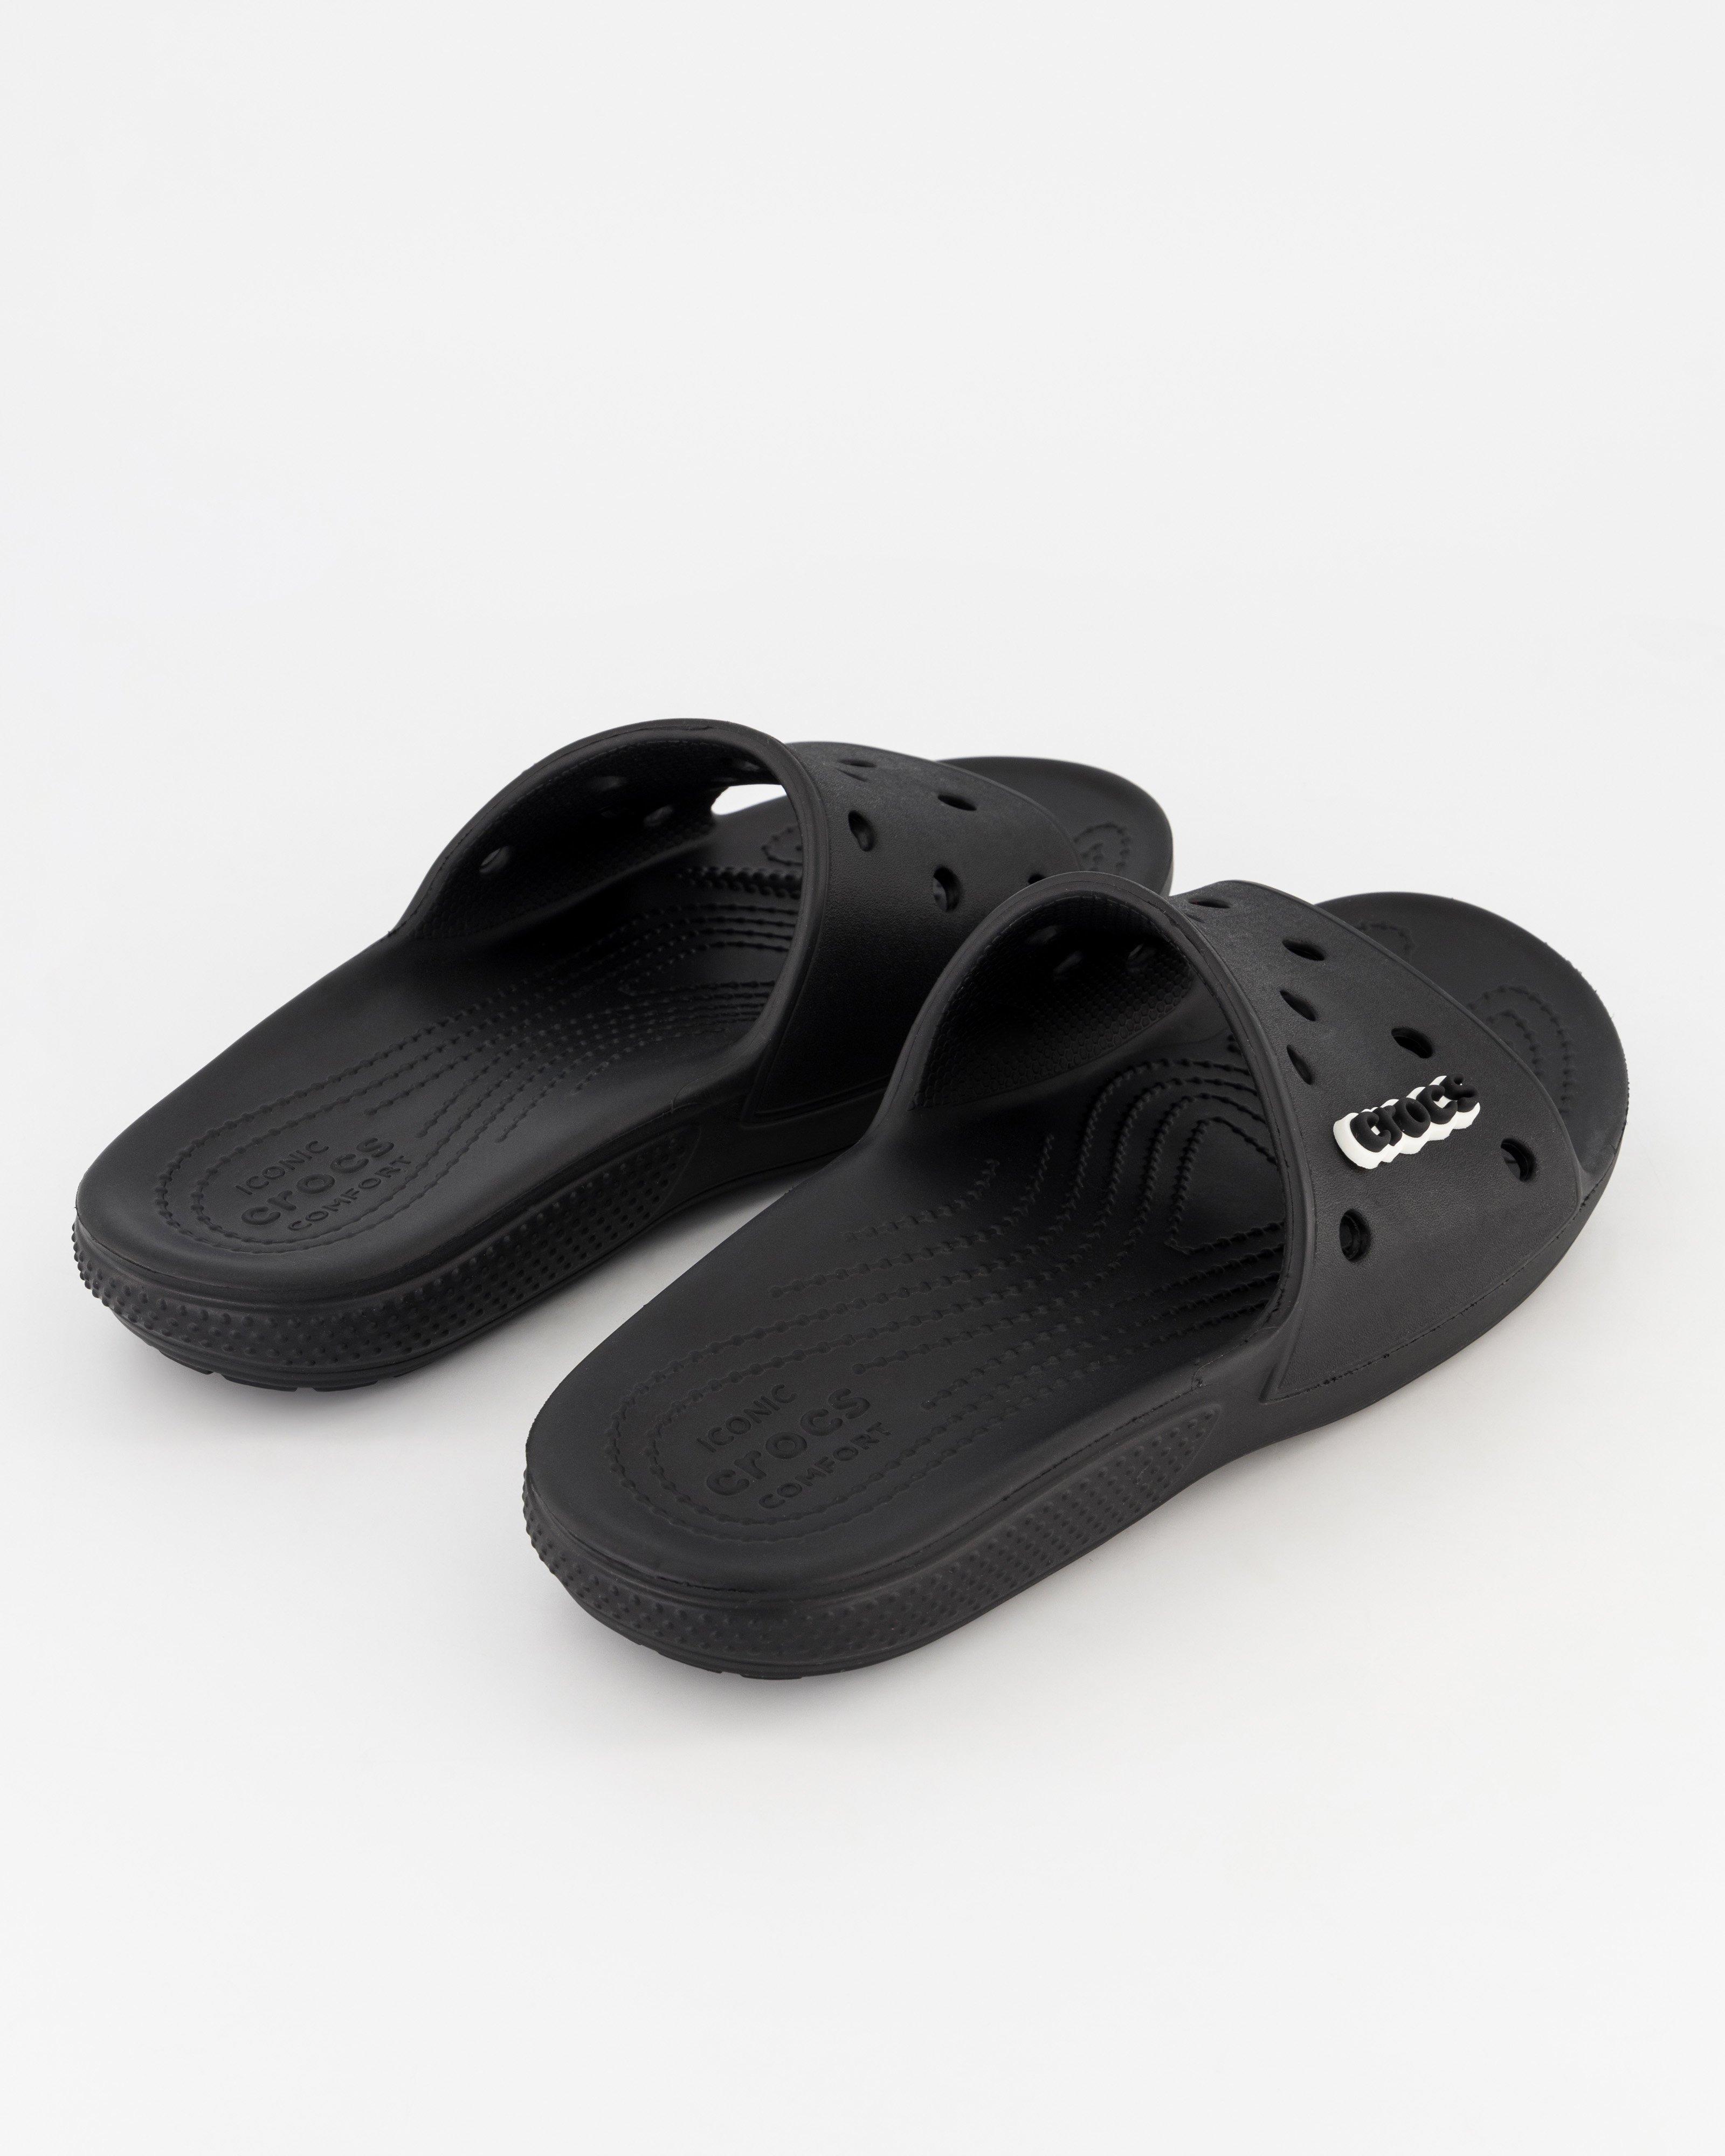 Men's Crocs Classic Slide -  Black